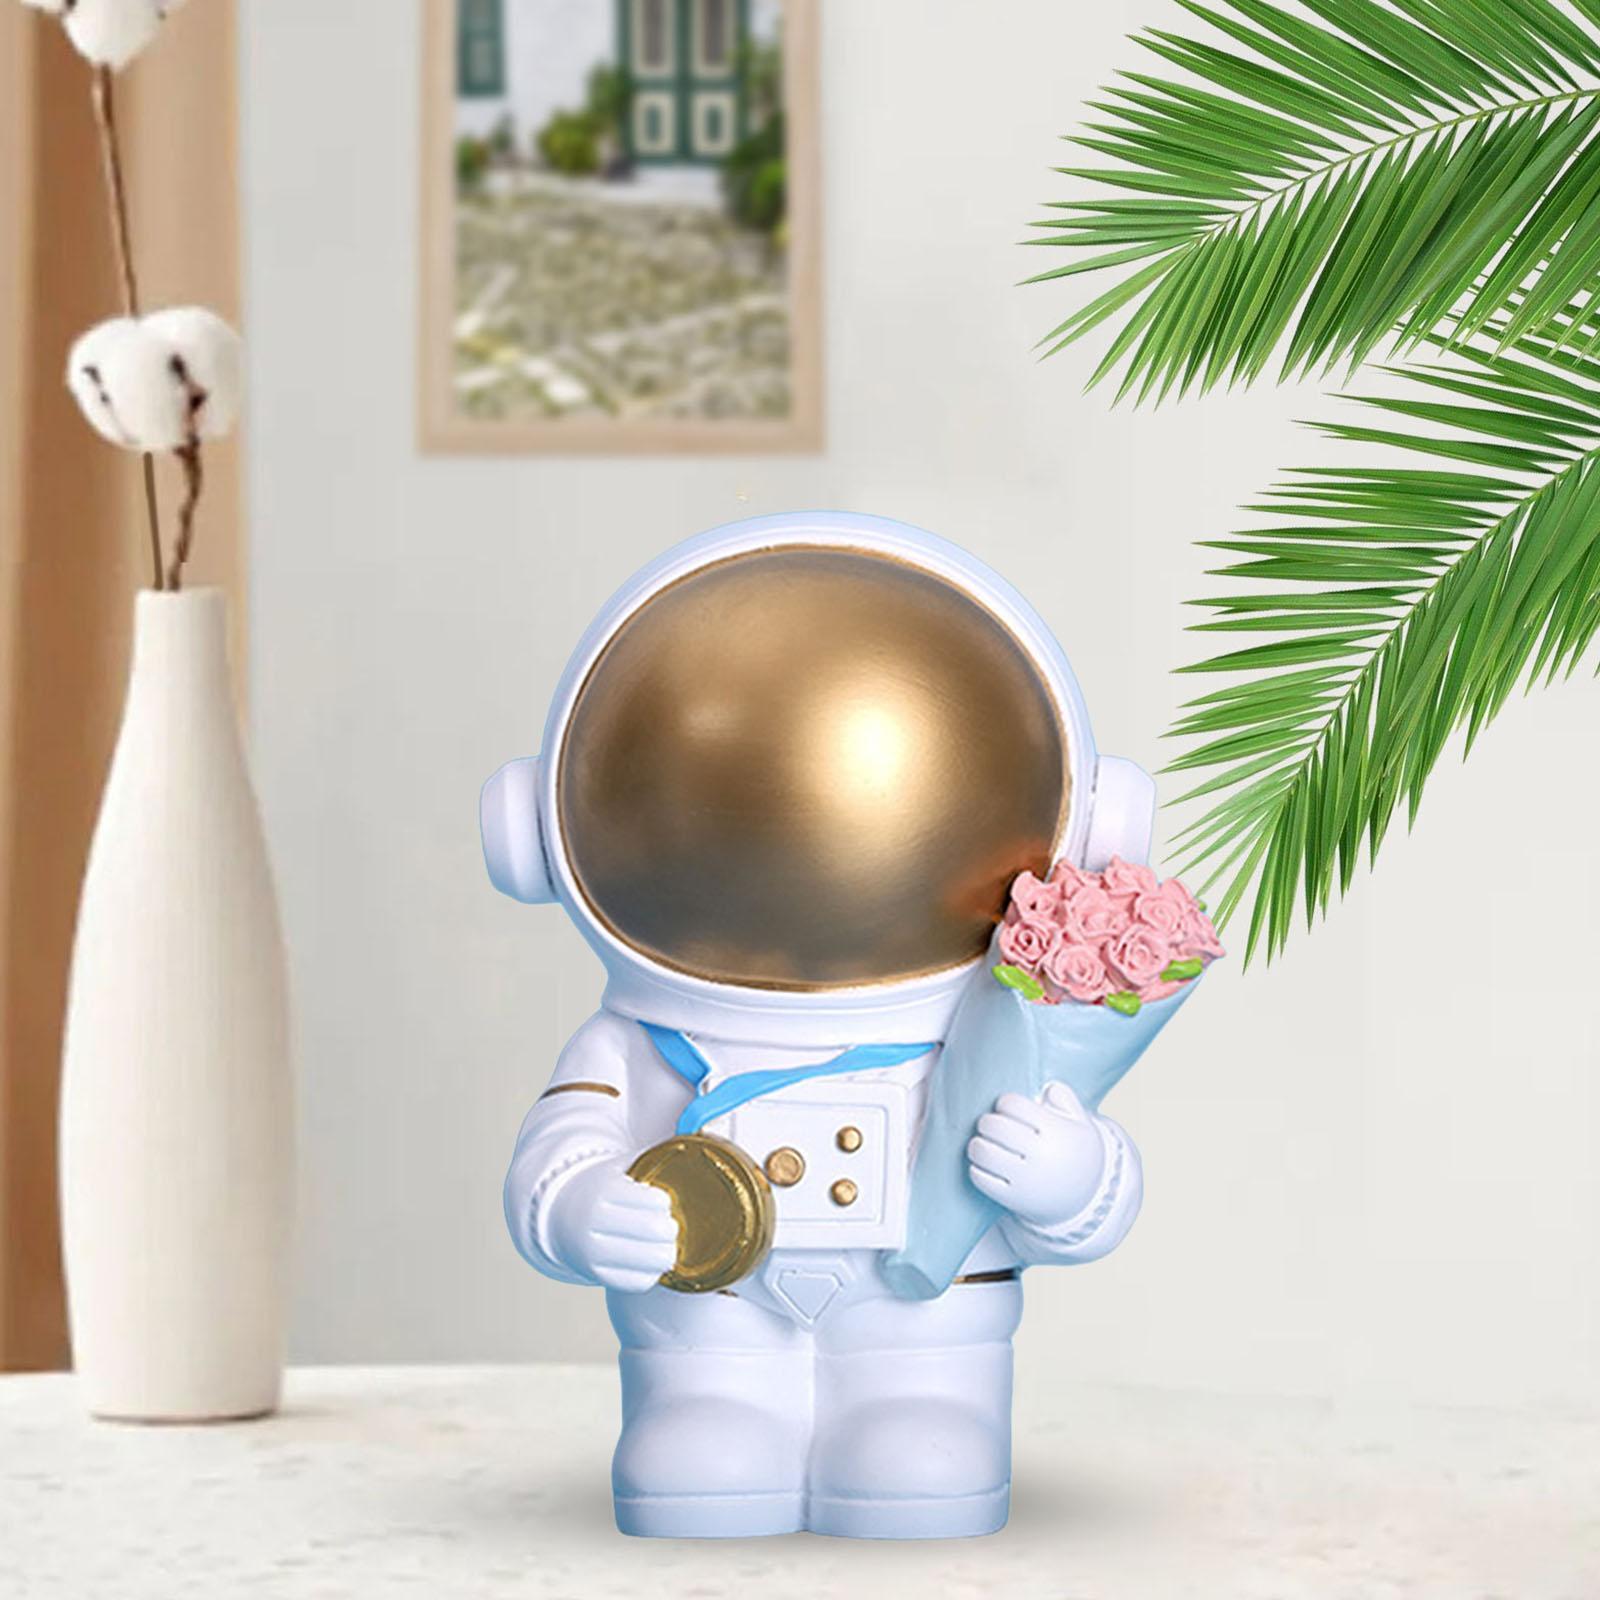 Astronaut Figurine Sculpture Figures Resin Decoration Crafts for Living Room